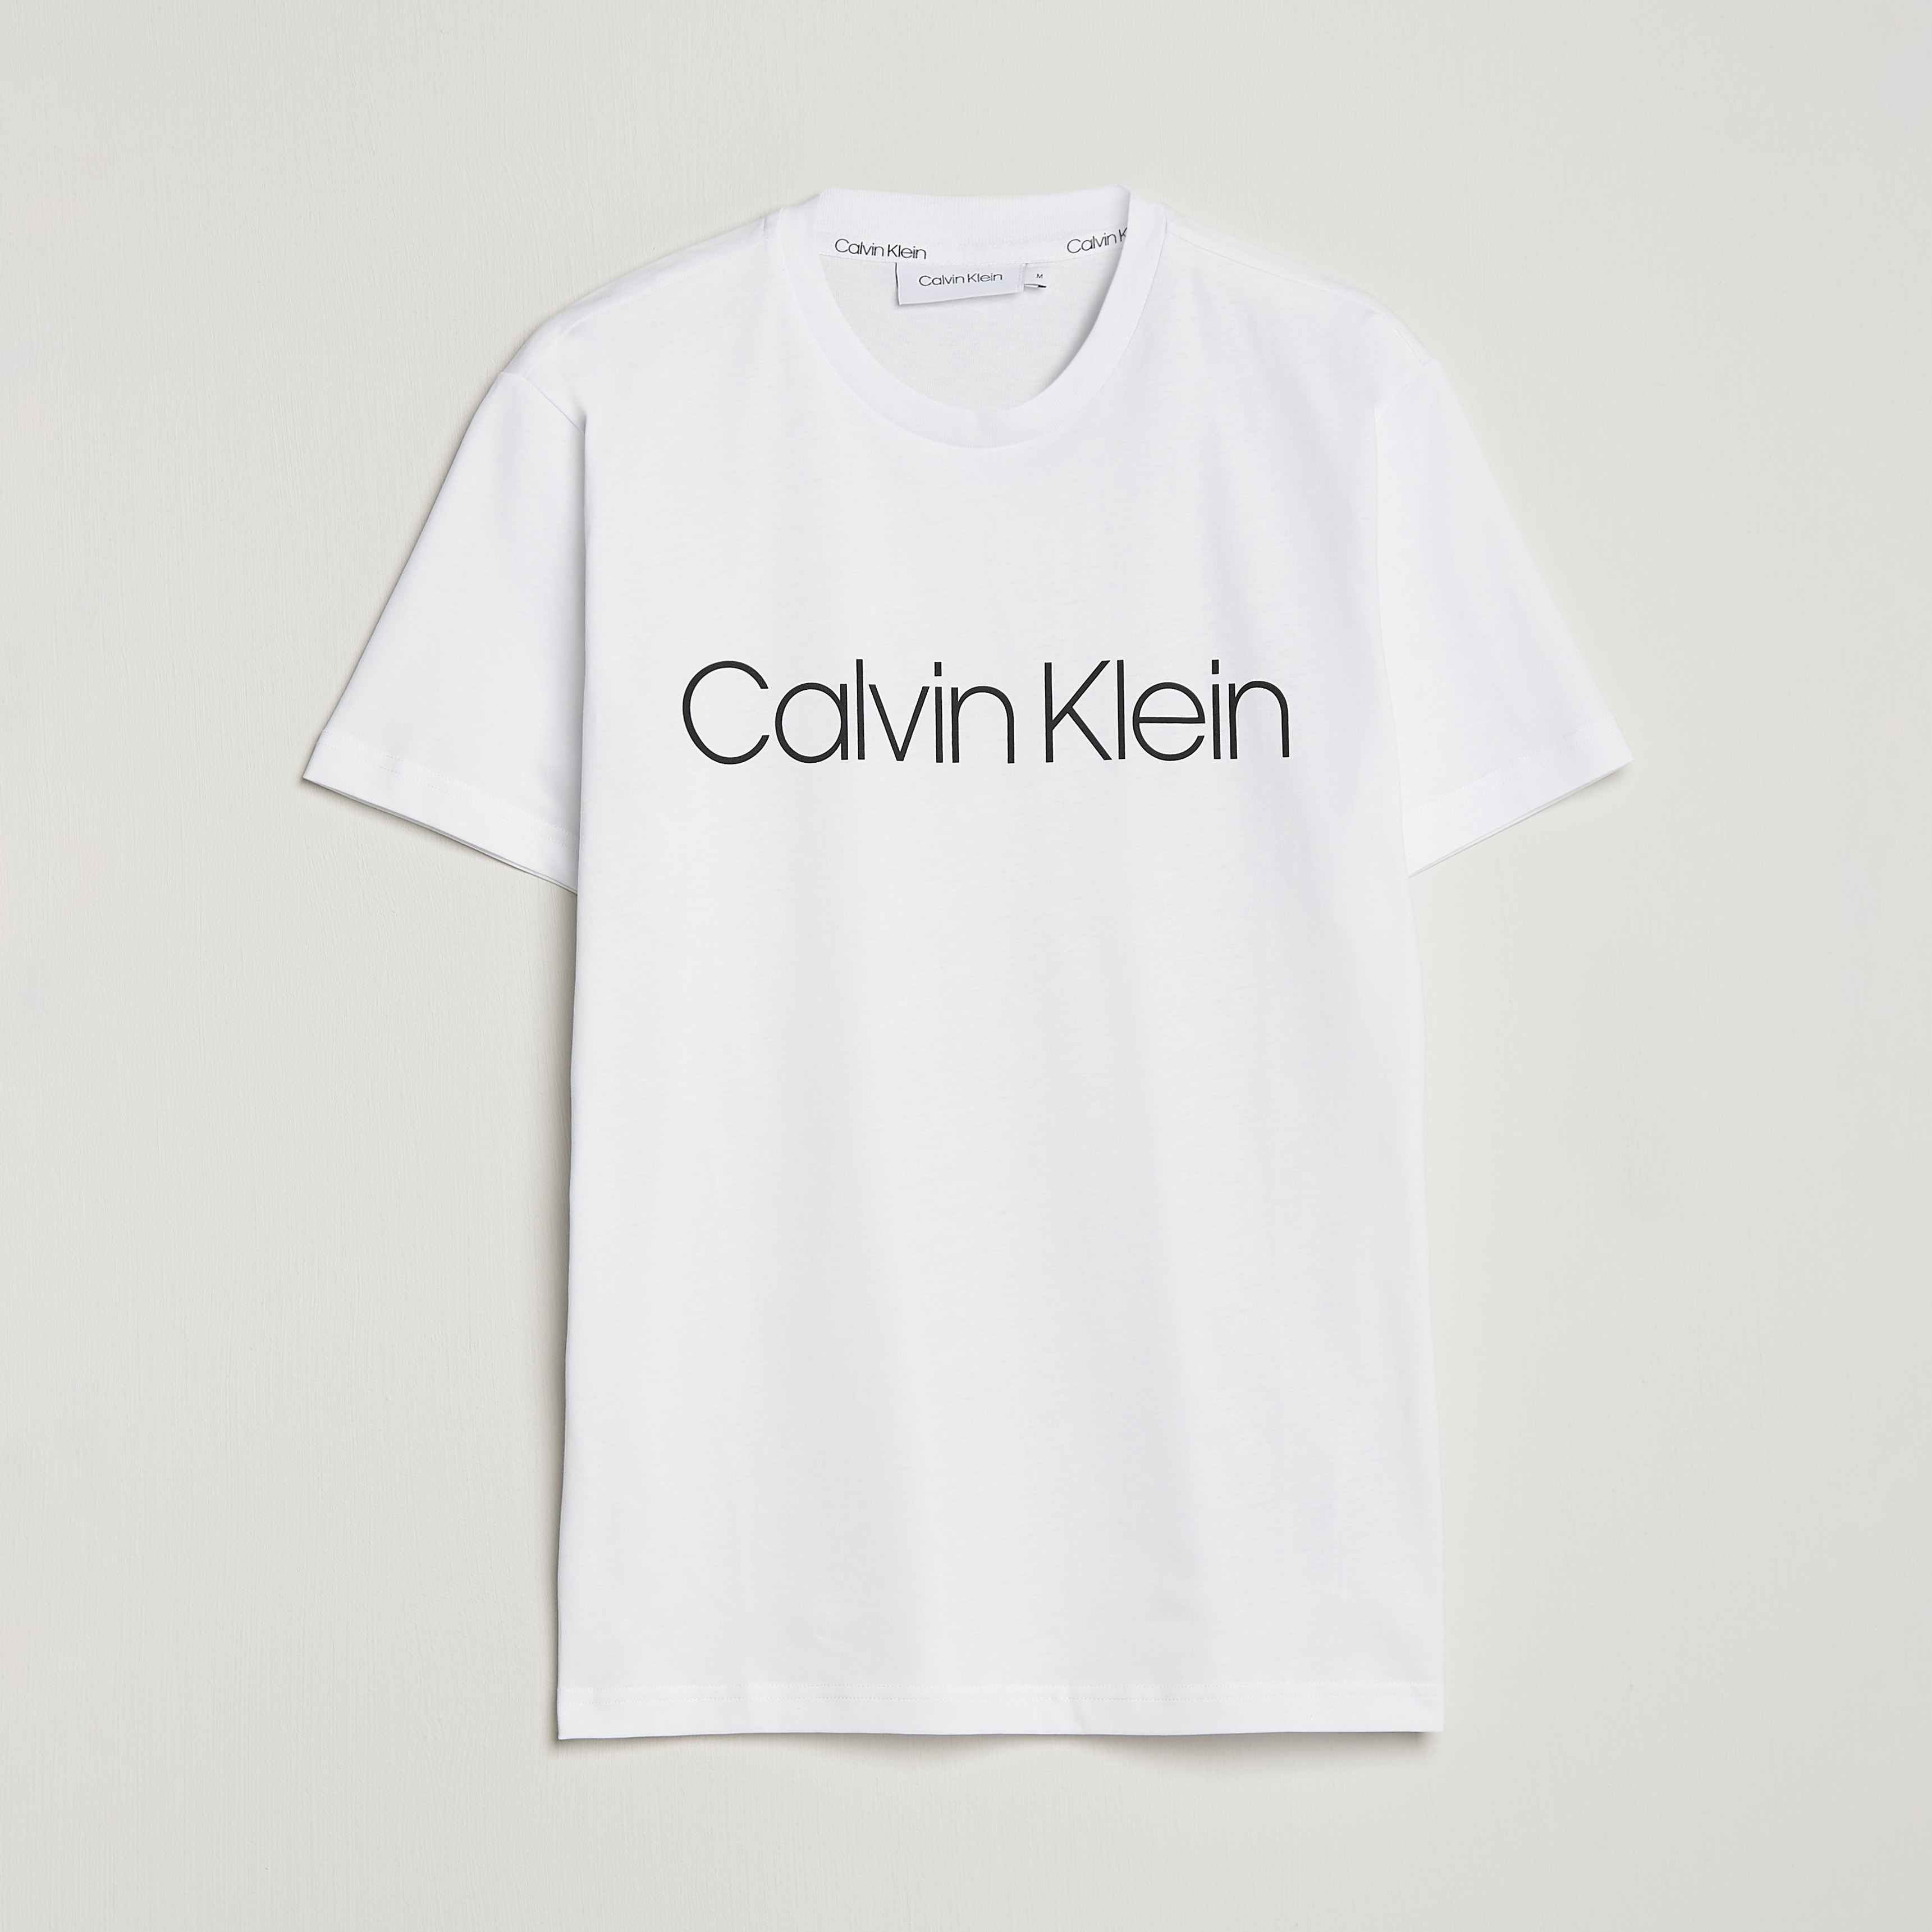 bei Front Calvin Klein White of Care Carl Tee Logo